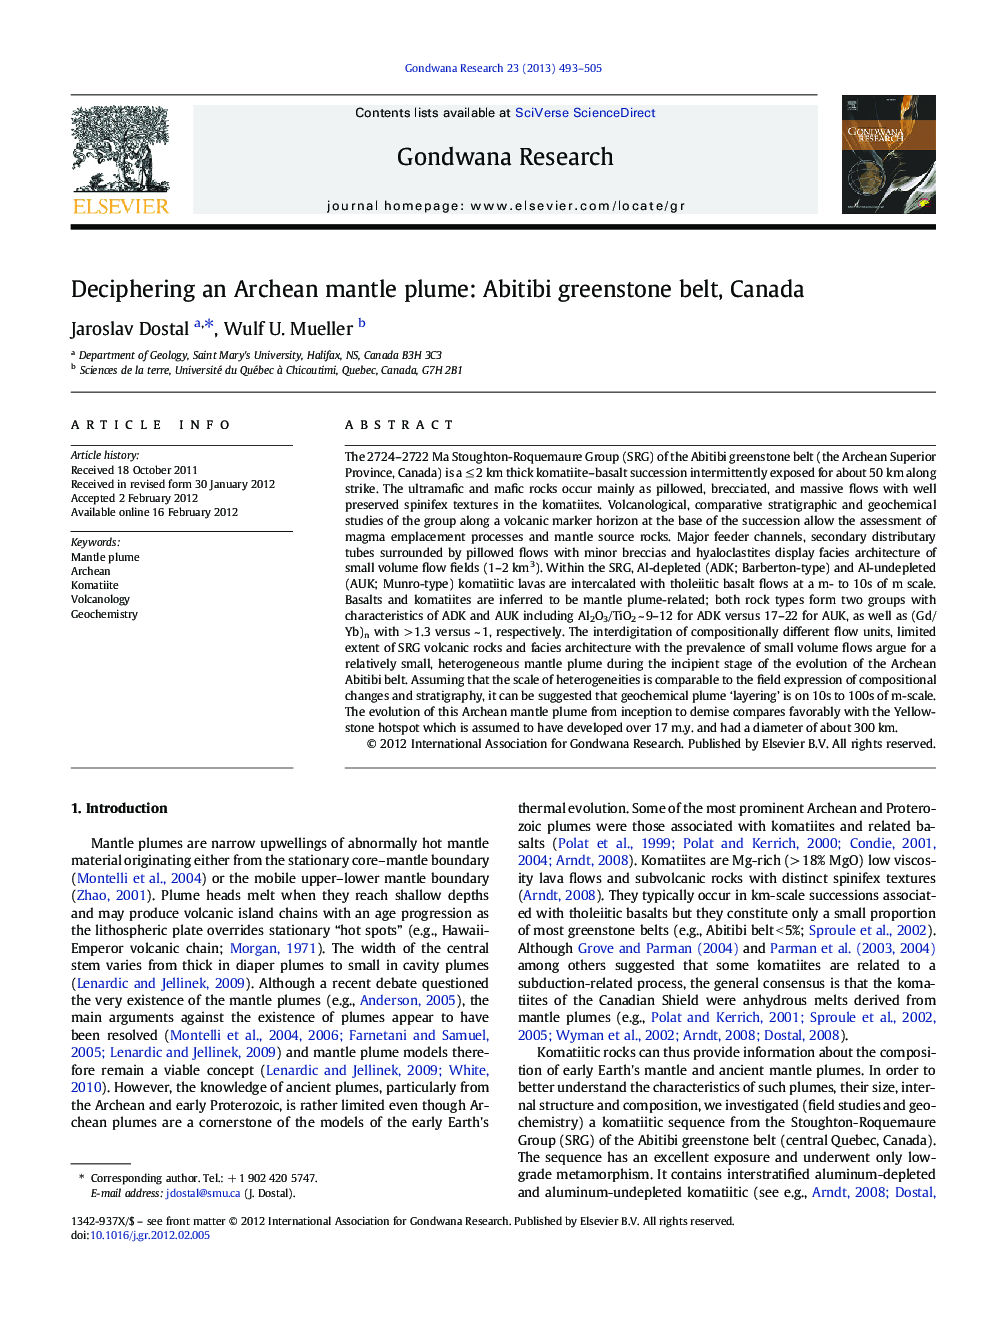 Deciphering an Archean mantle plume: Abitibi greenstone belt, Canada